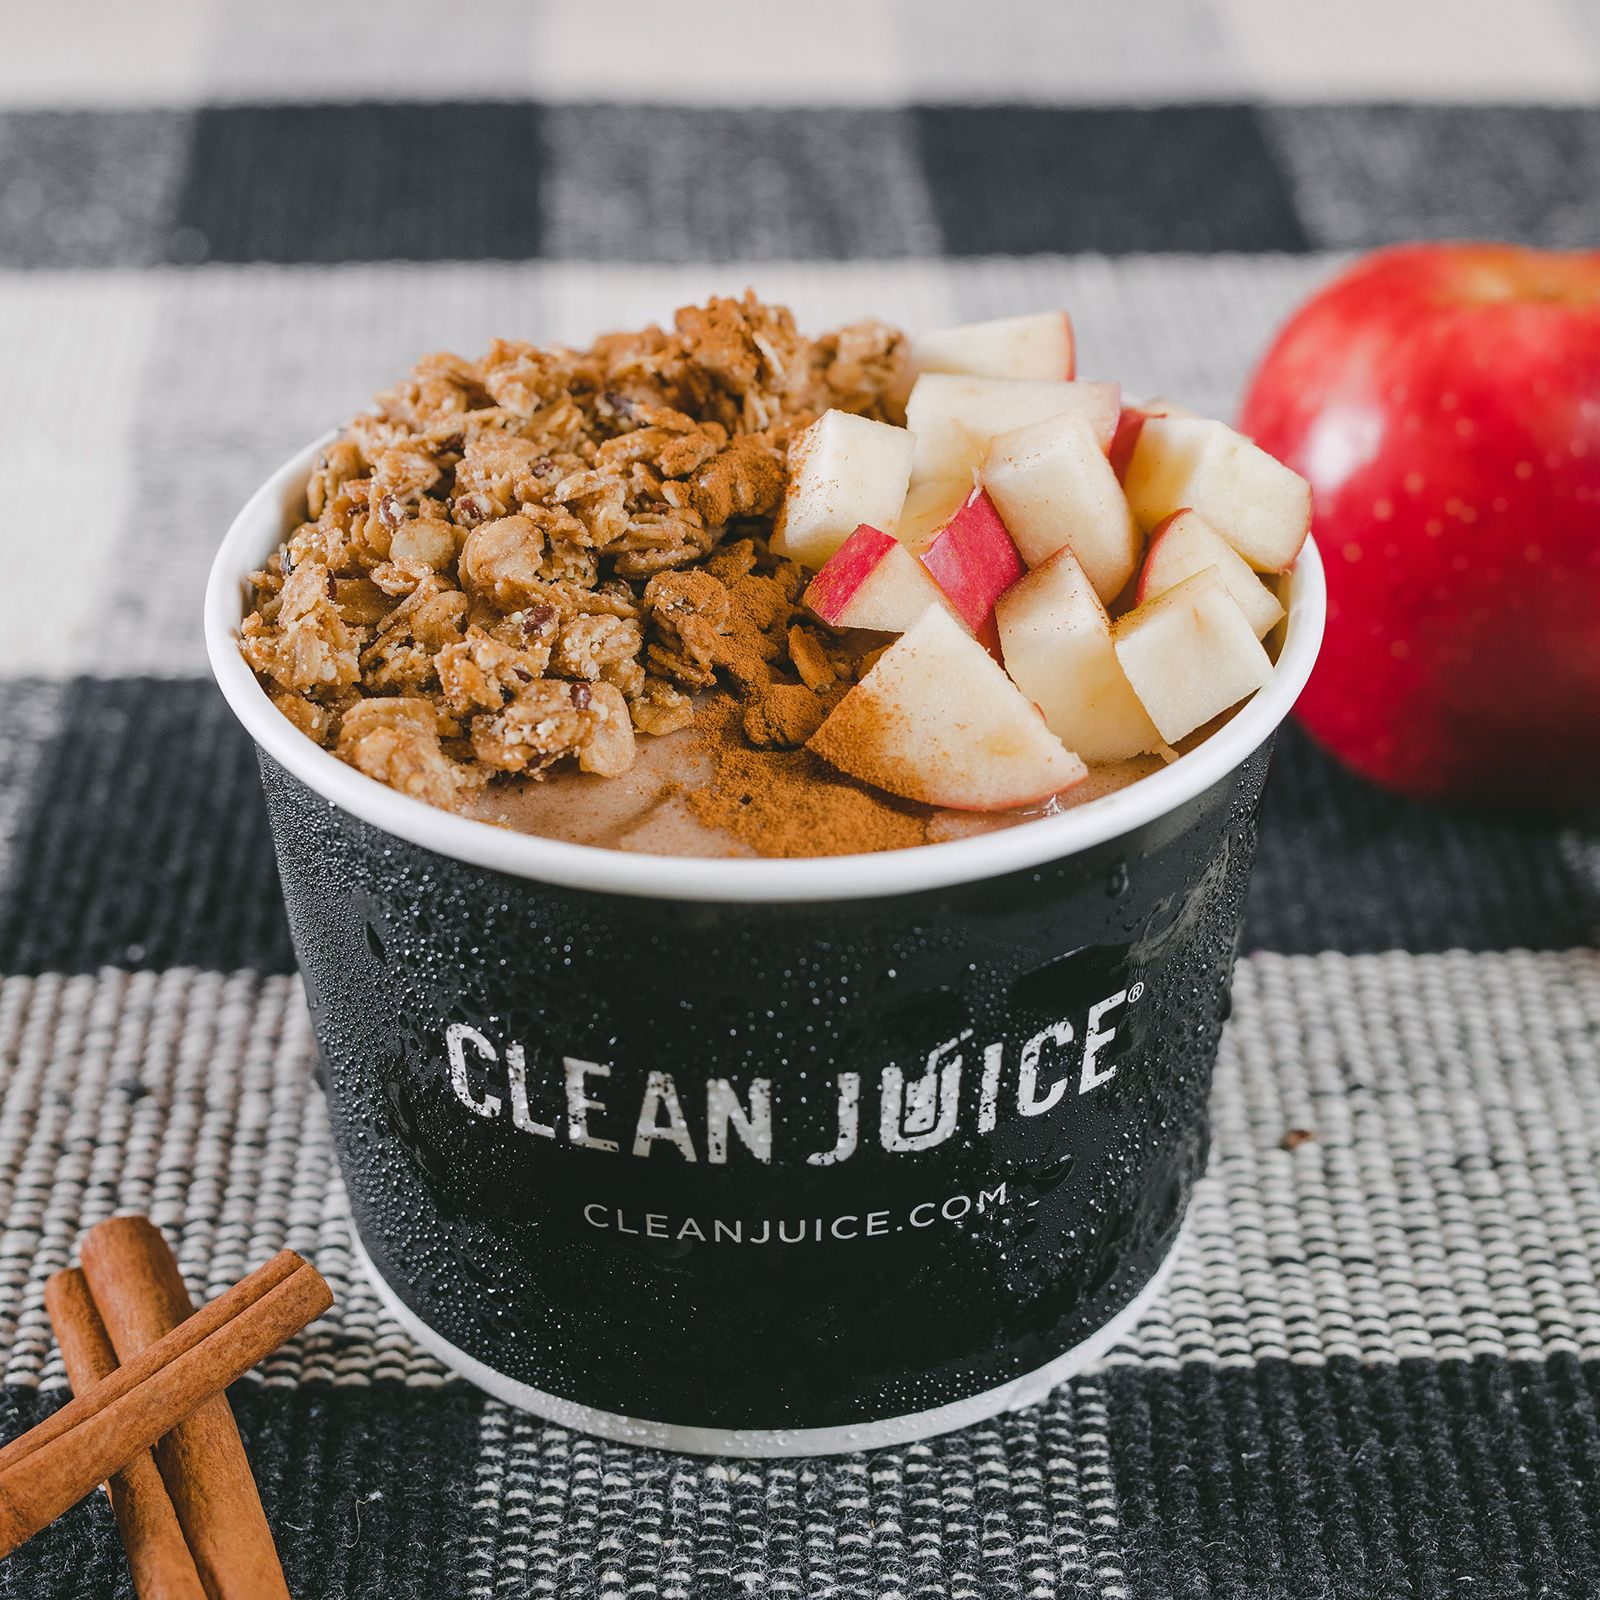 How Do Ya Like Them Apples? Clean Juice Presents Two Tasty Organic Apple Menu Innovations